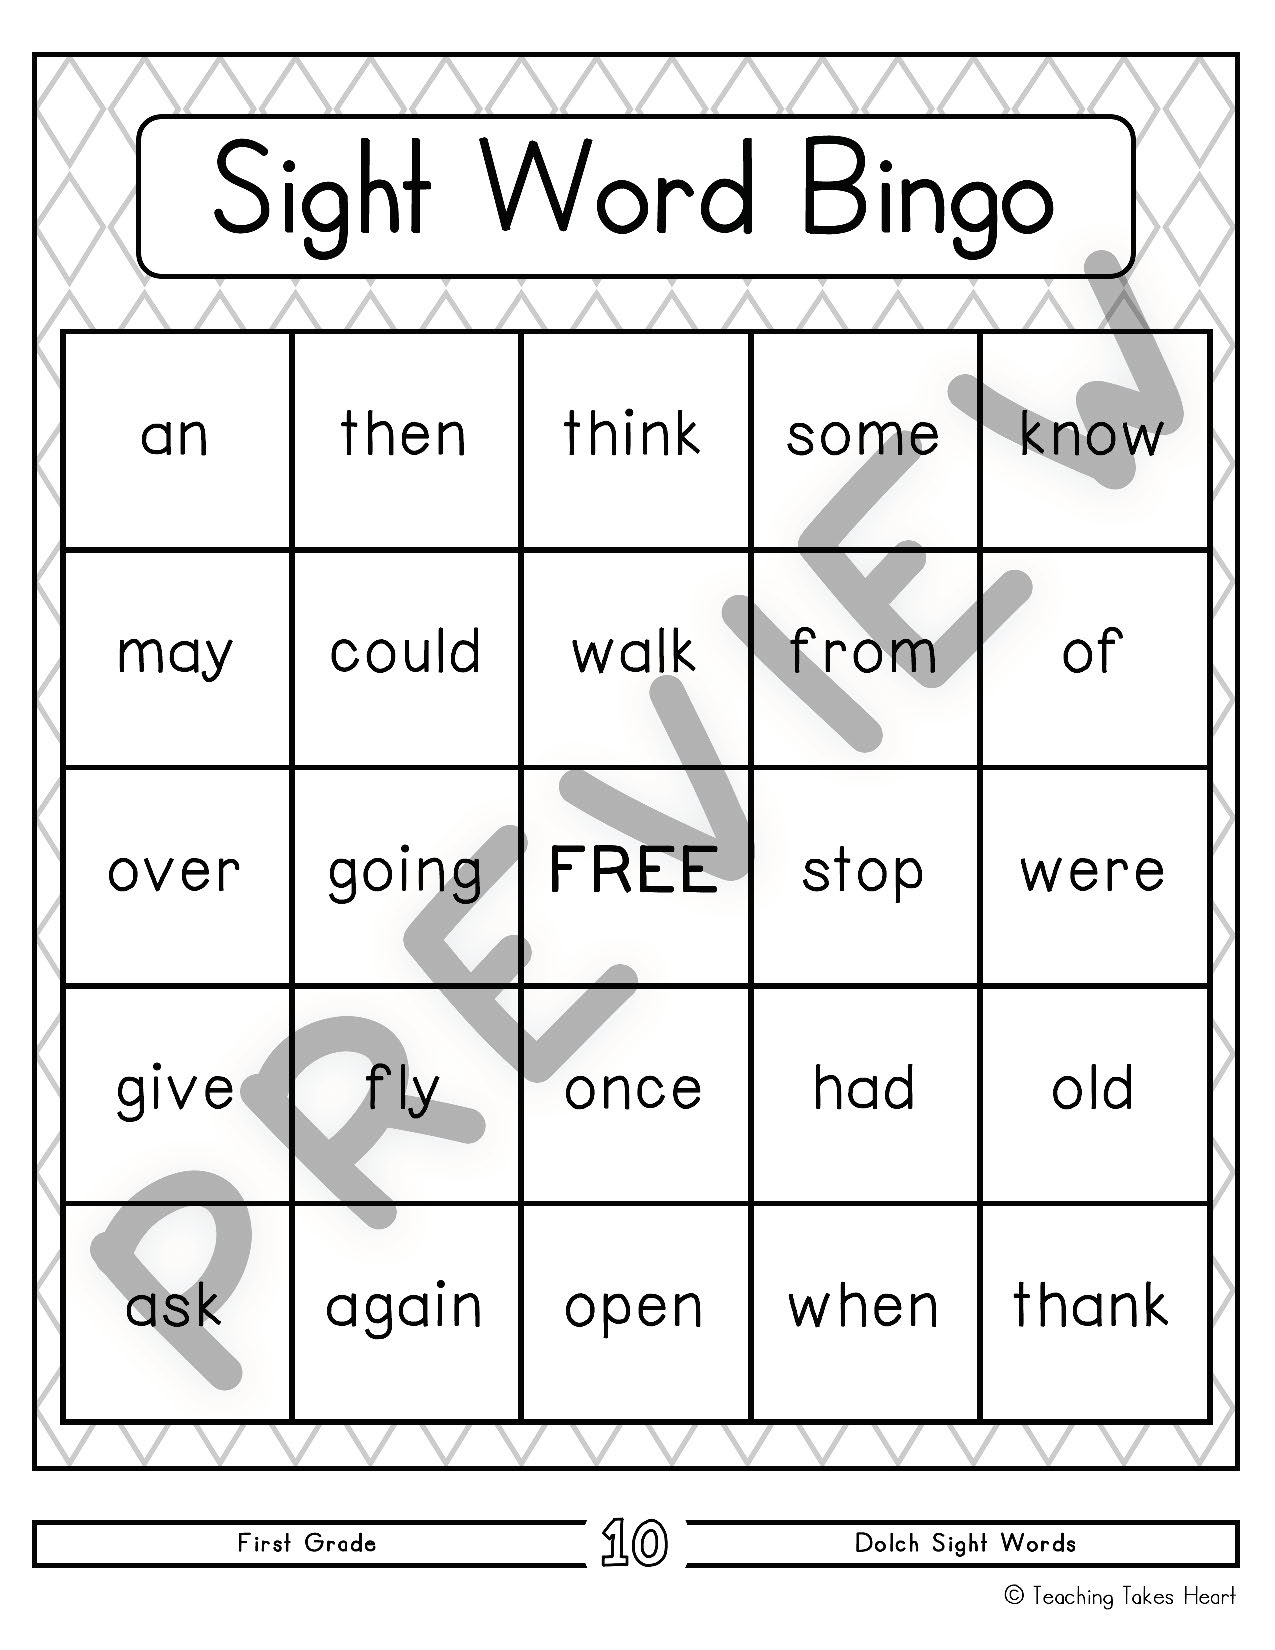 sight-word-bingo-first-grade-teaching-takes-heart